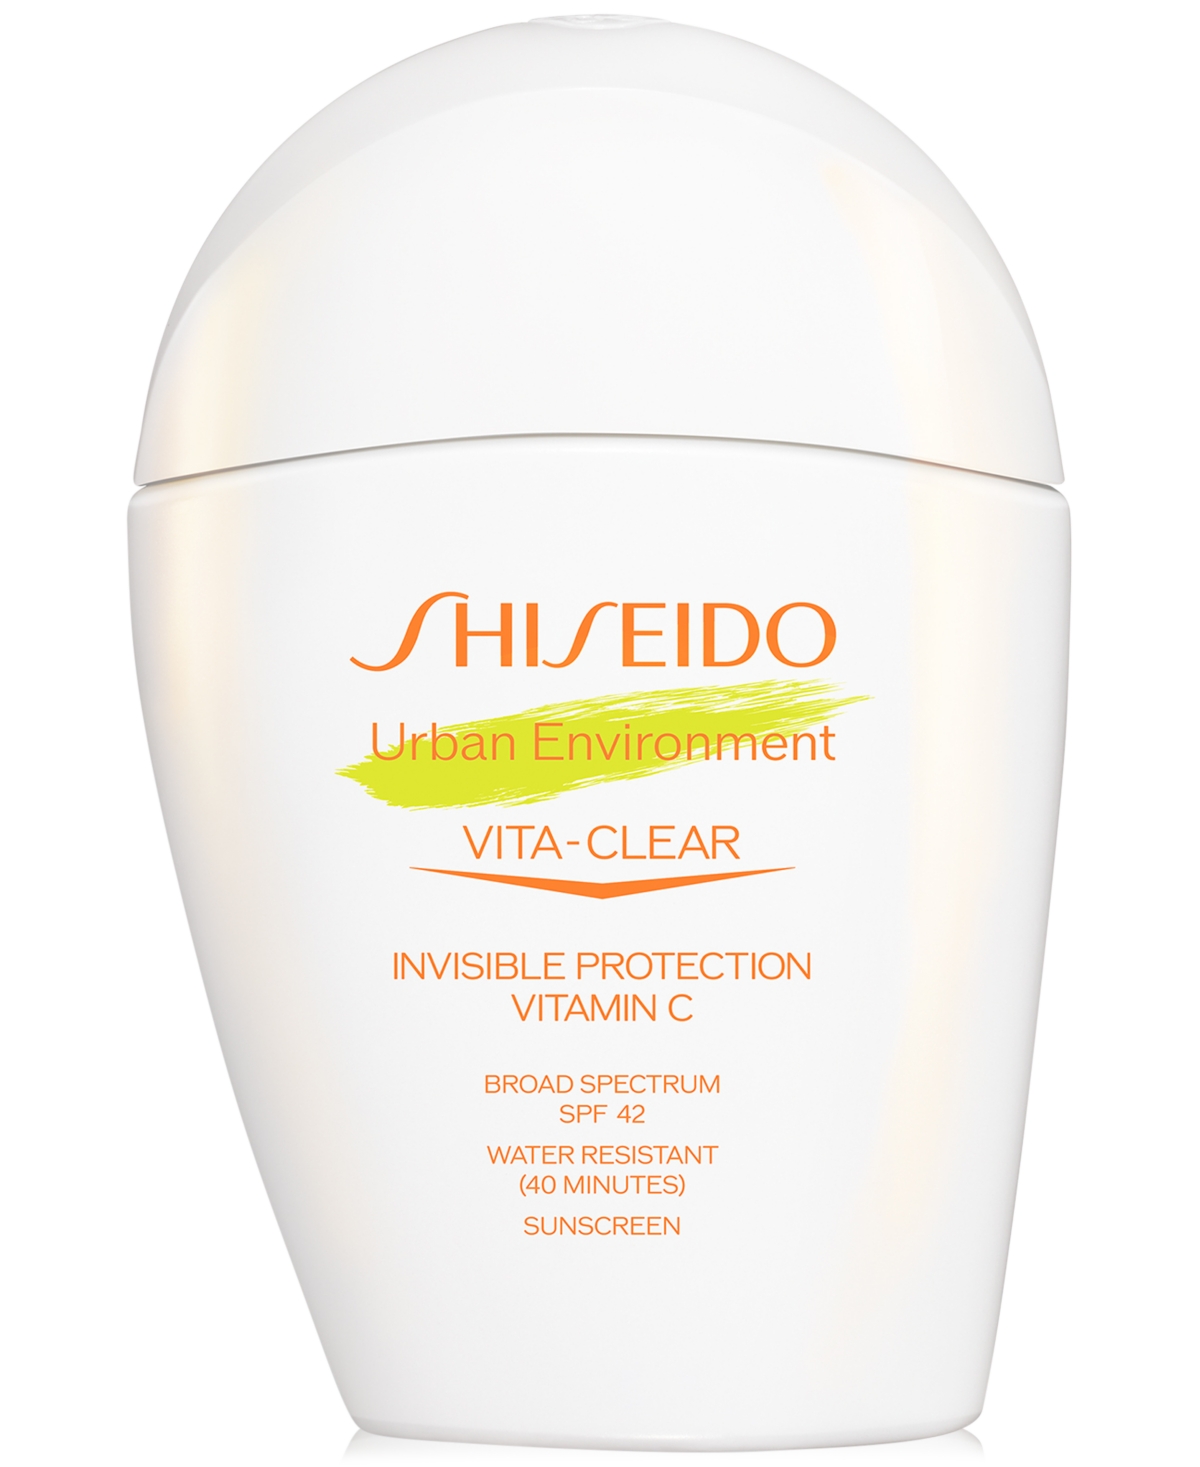 Shiseido Urban Environment Vita-clear Sunscreen Spf 42, 1 Oz.